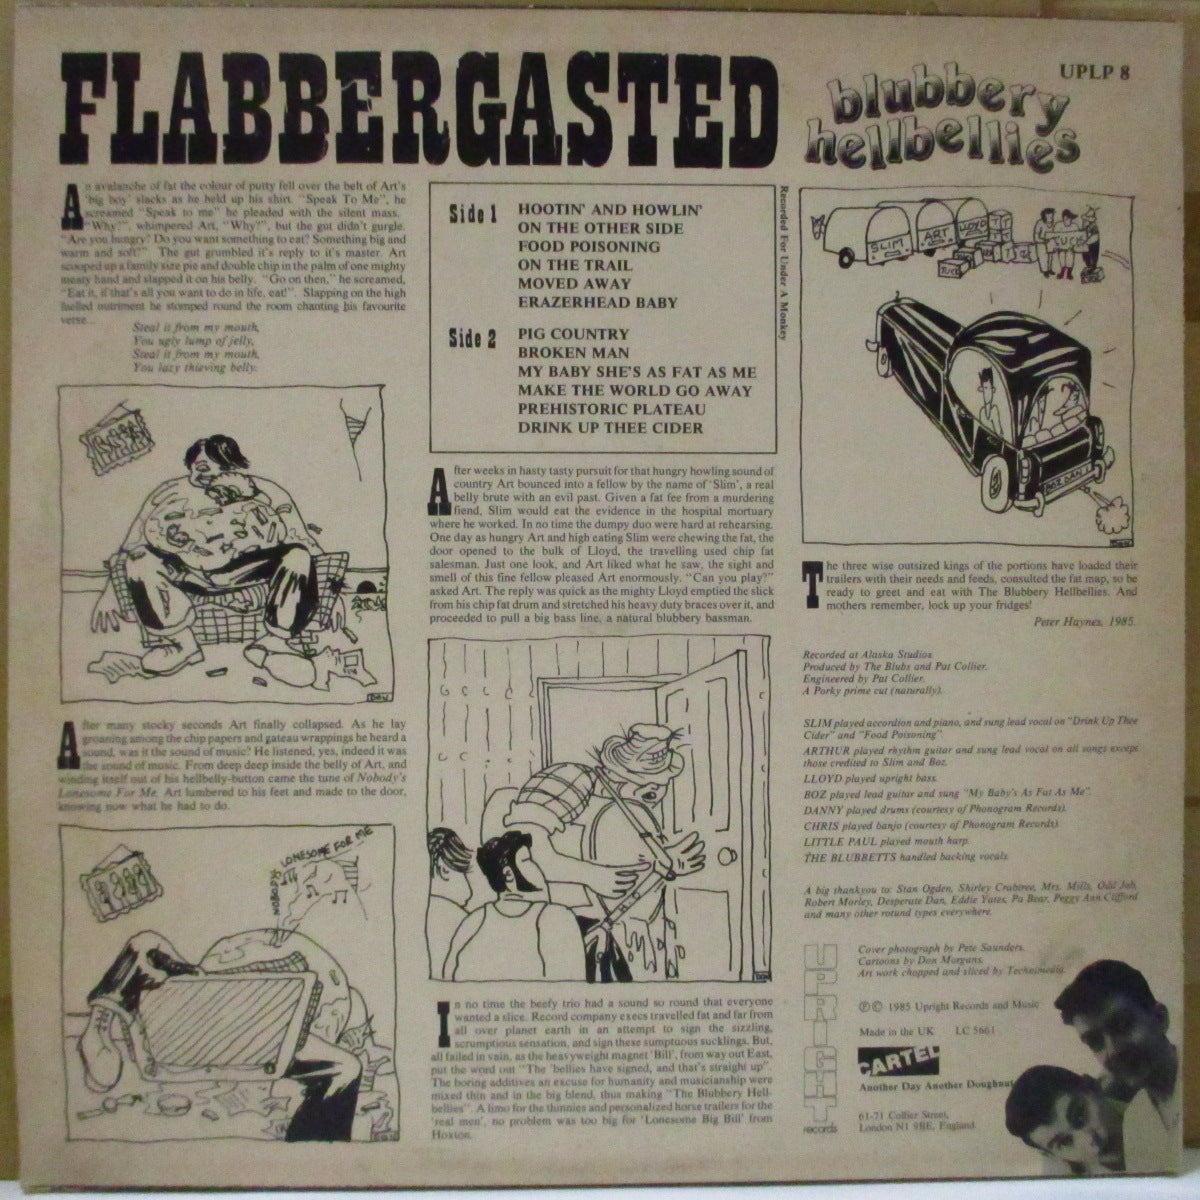 BLUBBERY HELLBELLIES (ブラベリー・ヘルベリーズ)  - Flabbergasted (UK オリジナル LP+ソフト紙インサート)